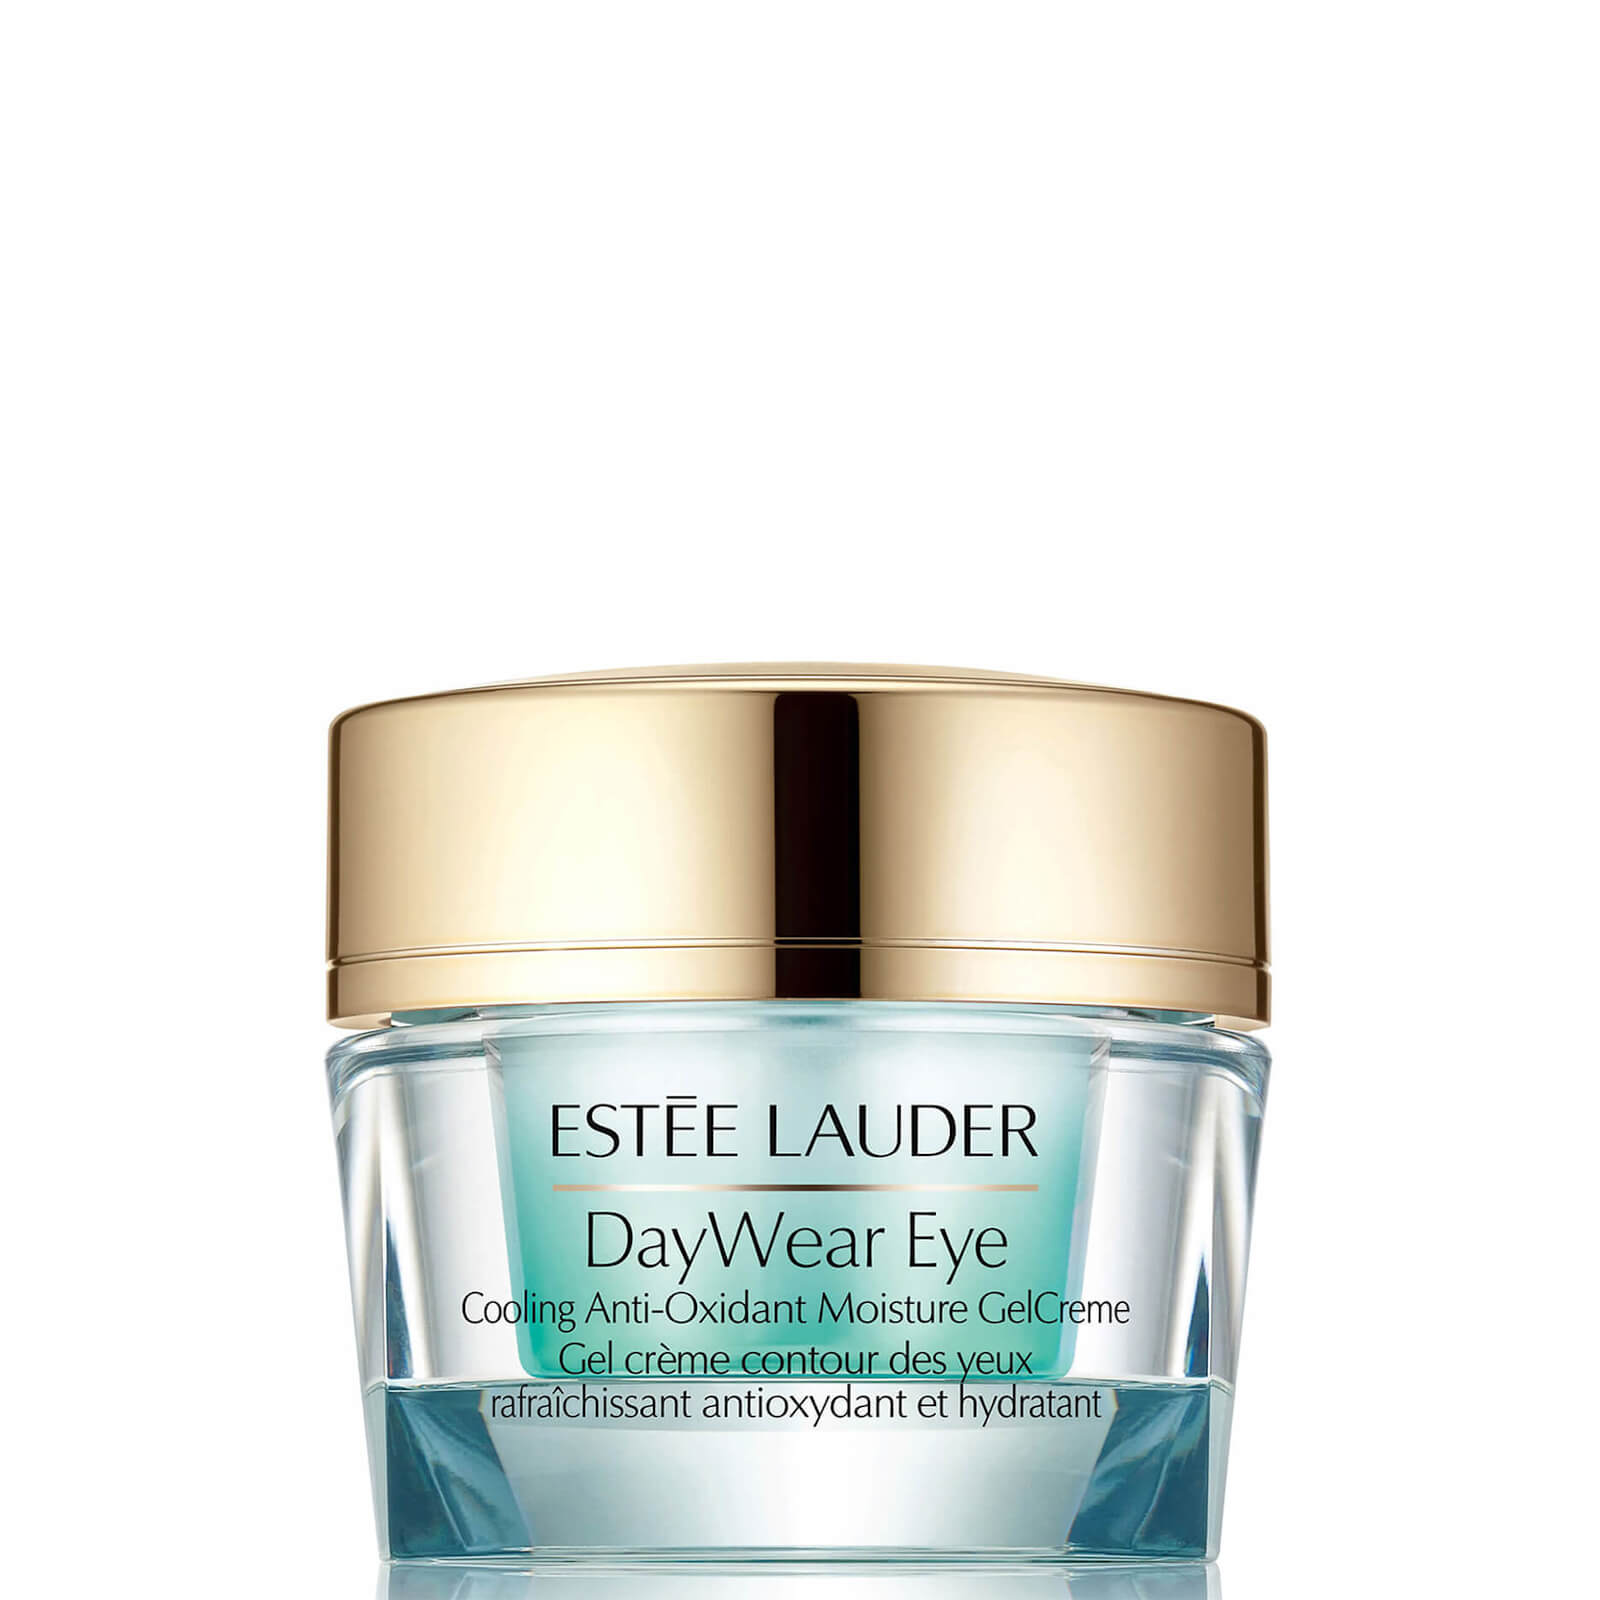 Estee Lauder Daywear Eye Cooling Anti-Oxidant Moisture Gel Creme 15ml